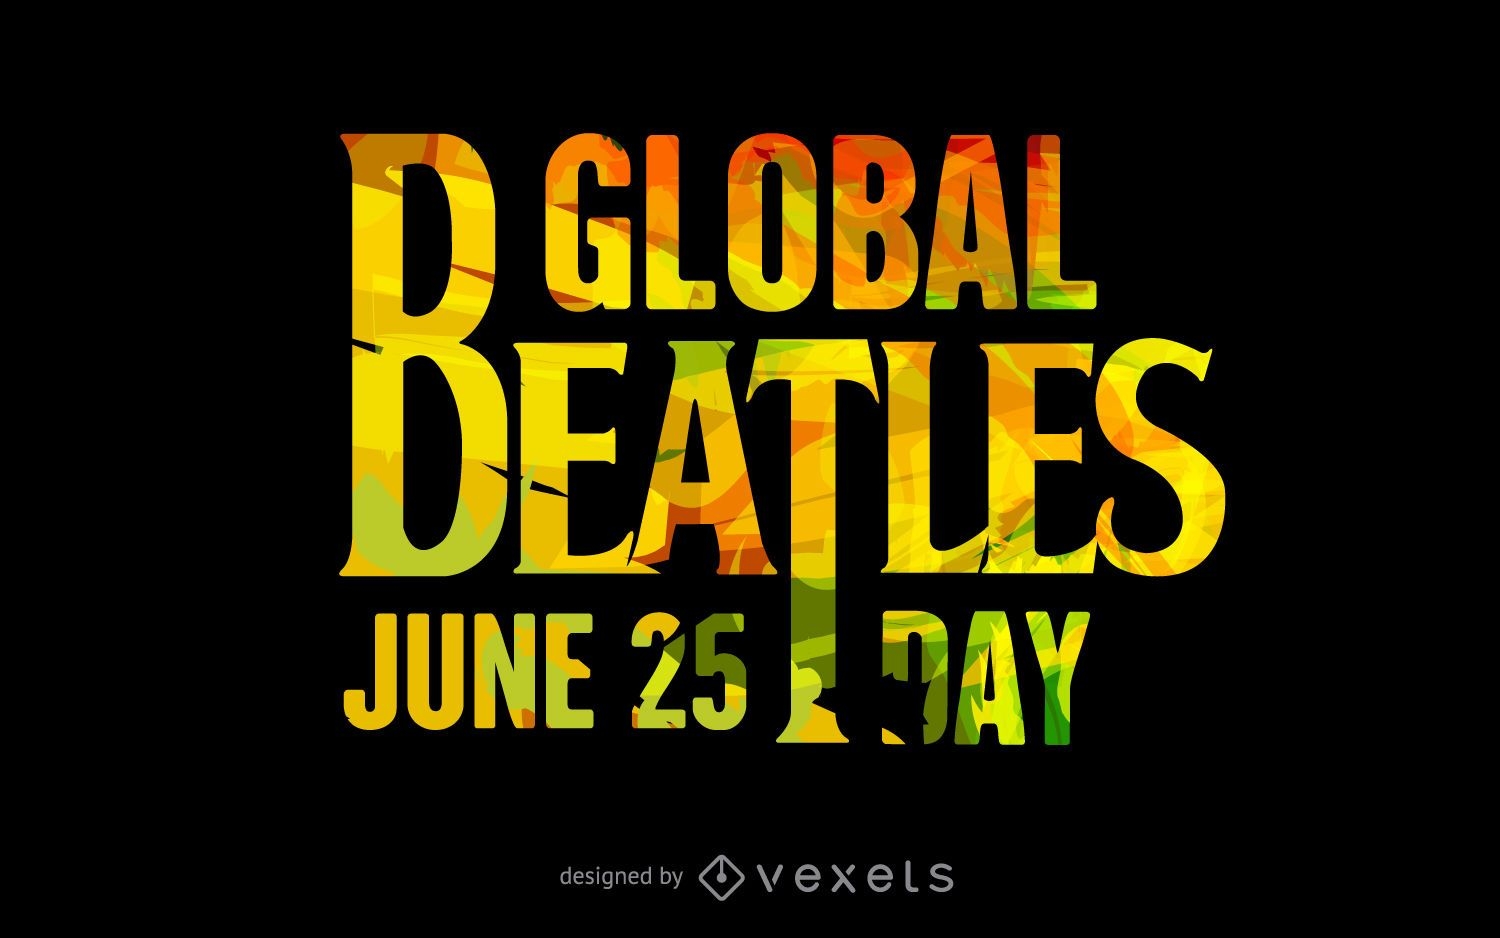 Typografischer Flyer zum Global Beatles Day